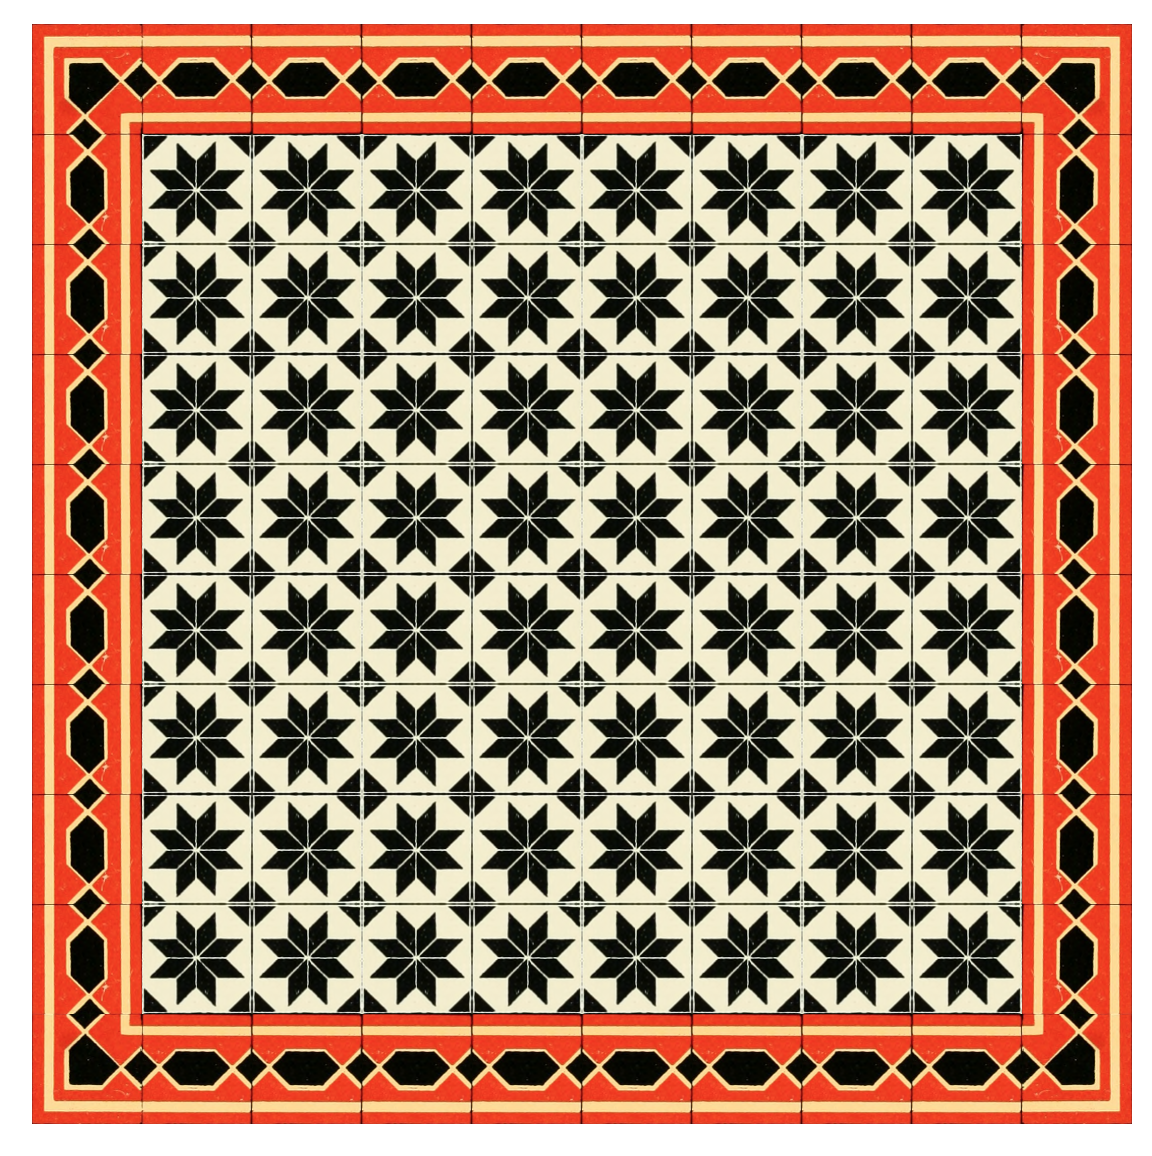 An example of an ornamental tile from Deepak's web app